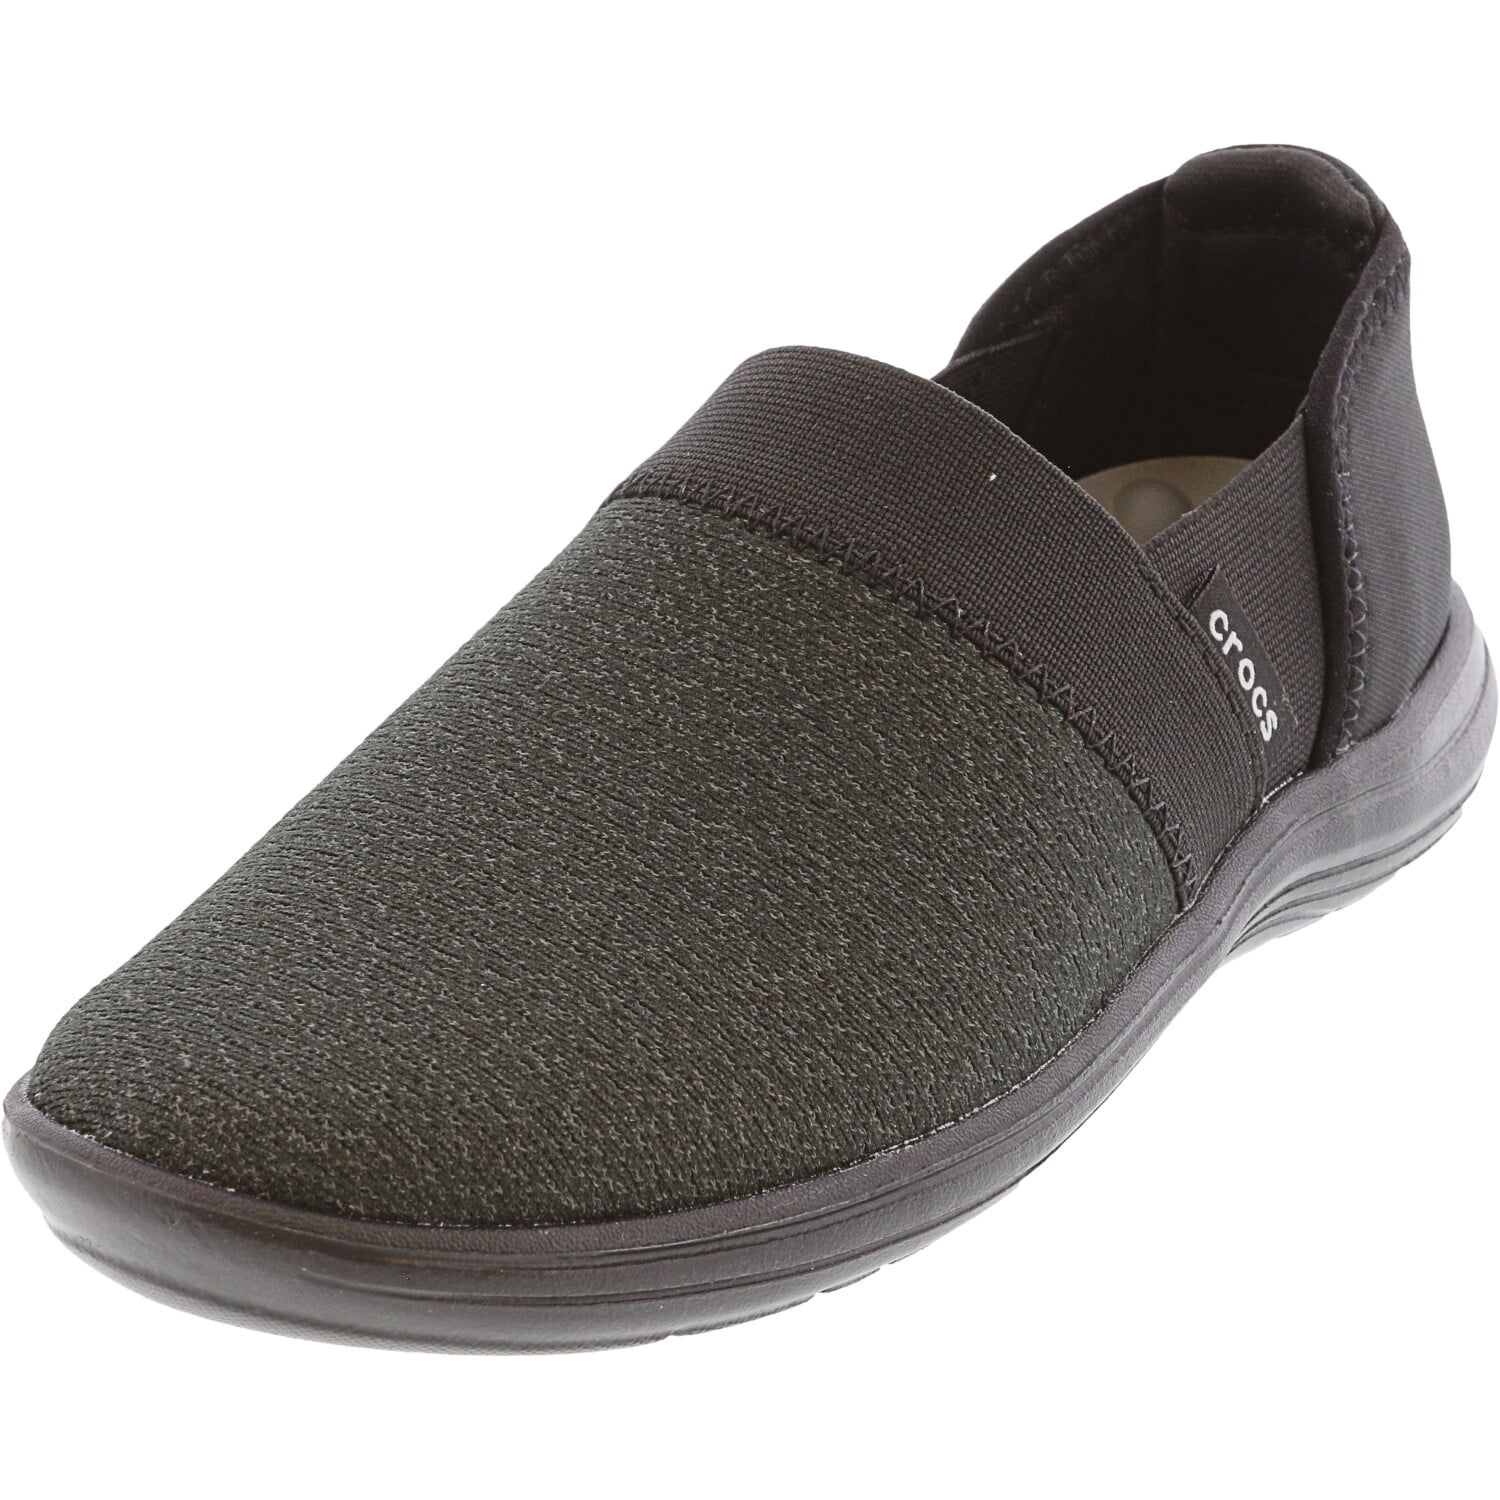 Crocs Women's Reviva Slip On Black / Low Top Polyester Slip-On Shoes ...